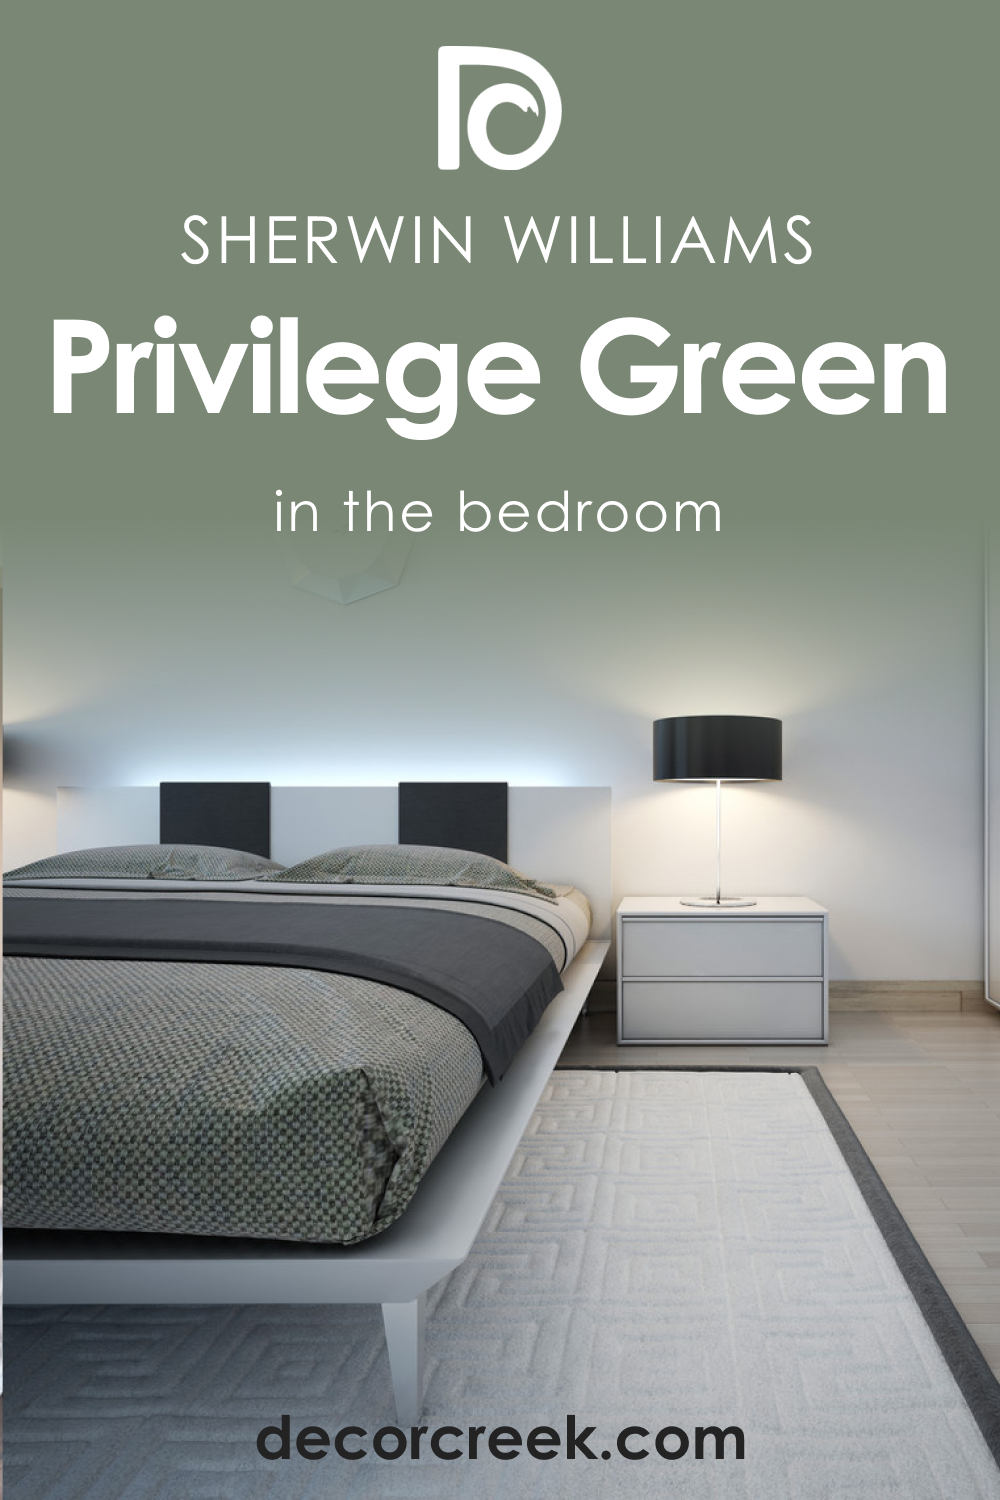 Privilege Green SW 6193 on Bedroom